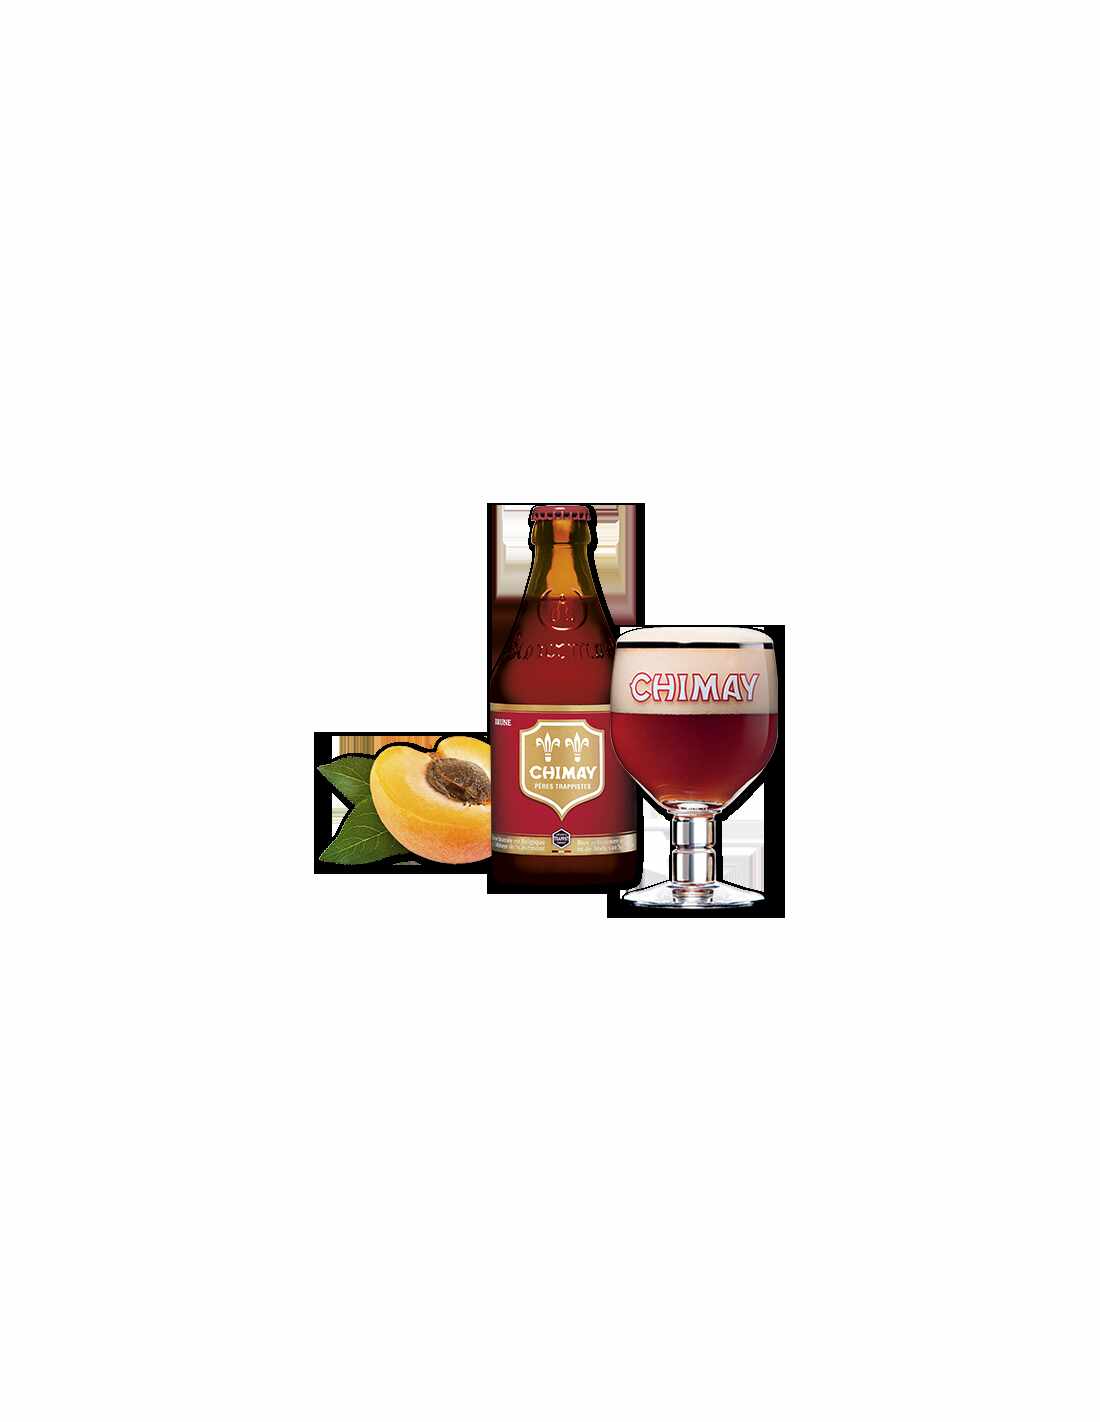 Bere rosie, nefiltrata Chimay Red, 8% alc., 0.33L, Belgia